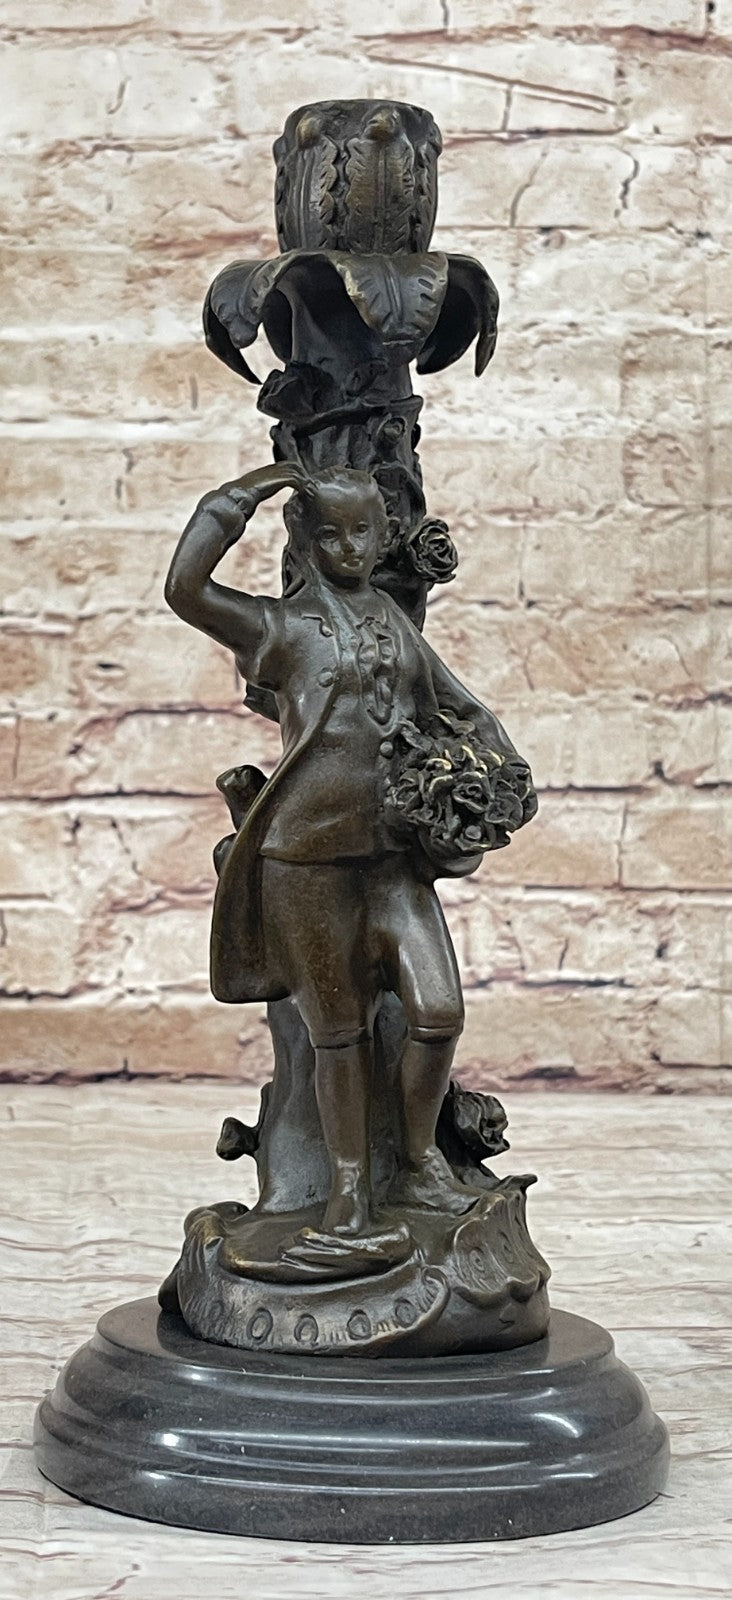 Collectible Evan Stone Bronze Candle Holder Statue Artwork Figurine Figure Hot Cast Decor